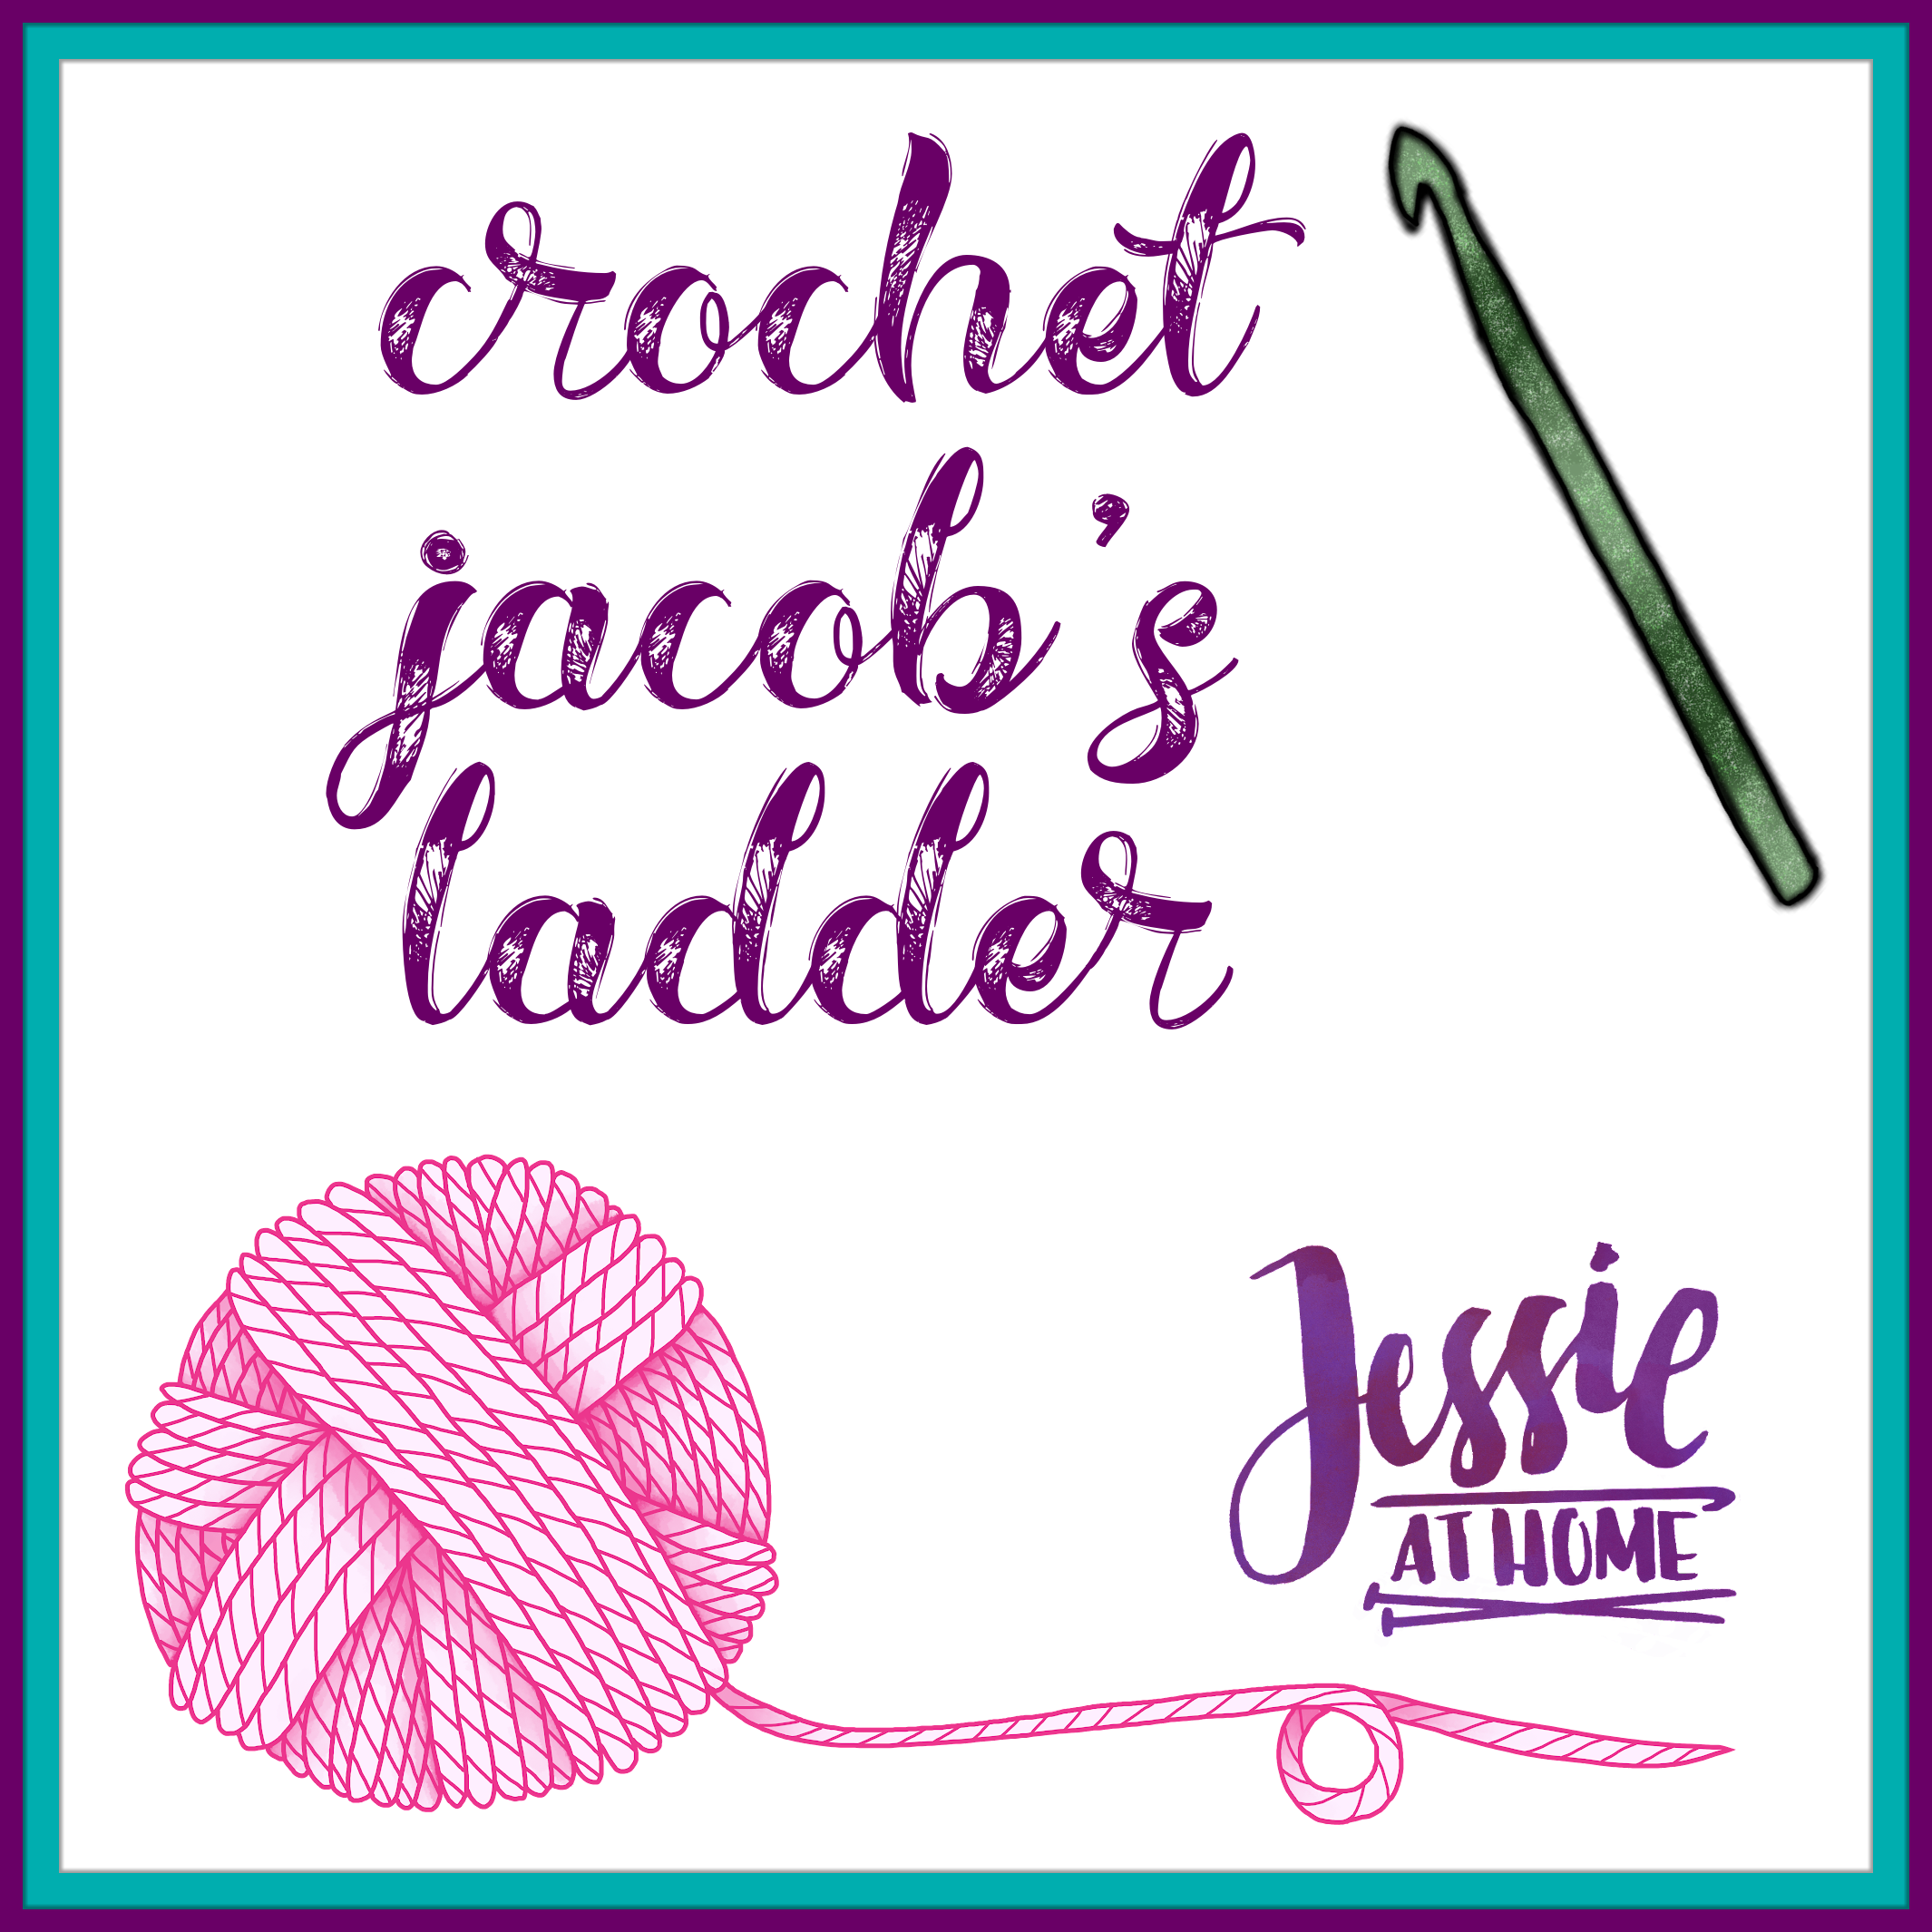 Crochet Jacob\'s Ladder Menu on Jessie At Home